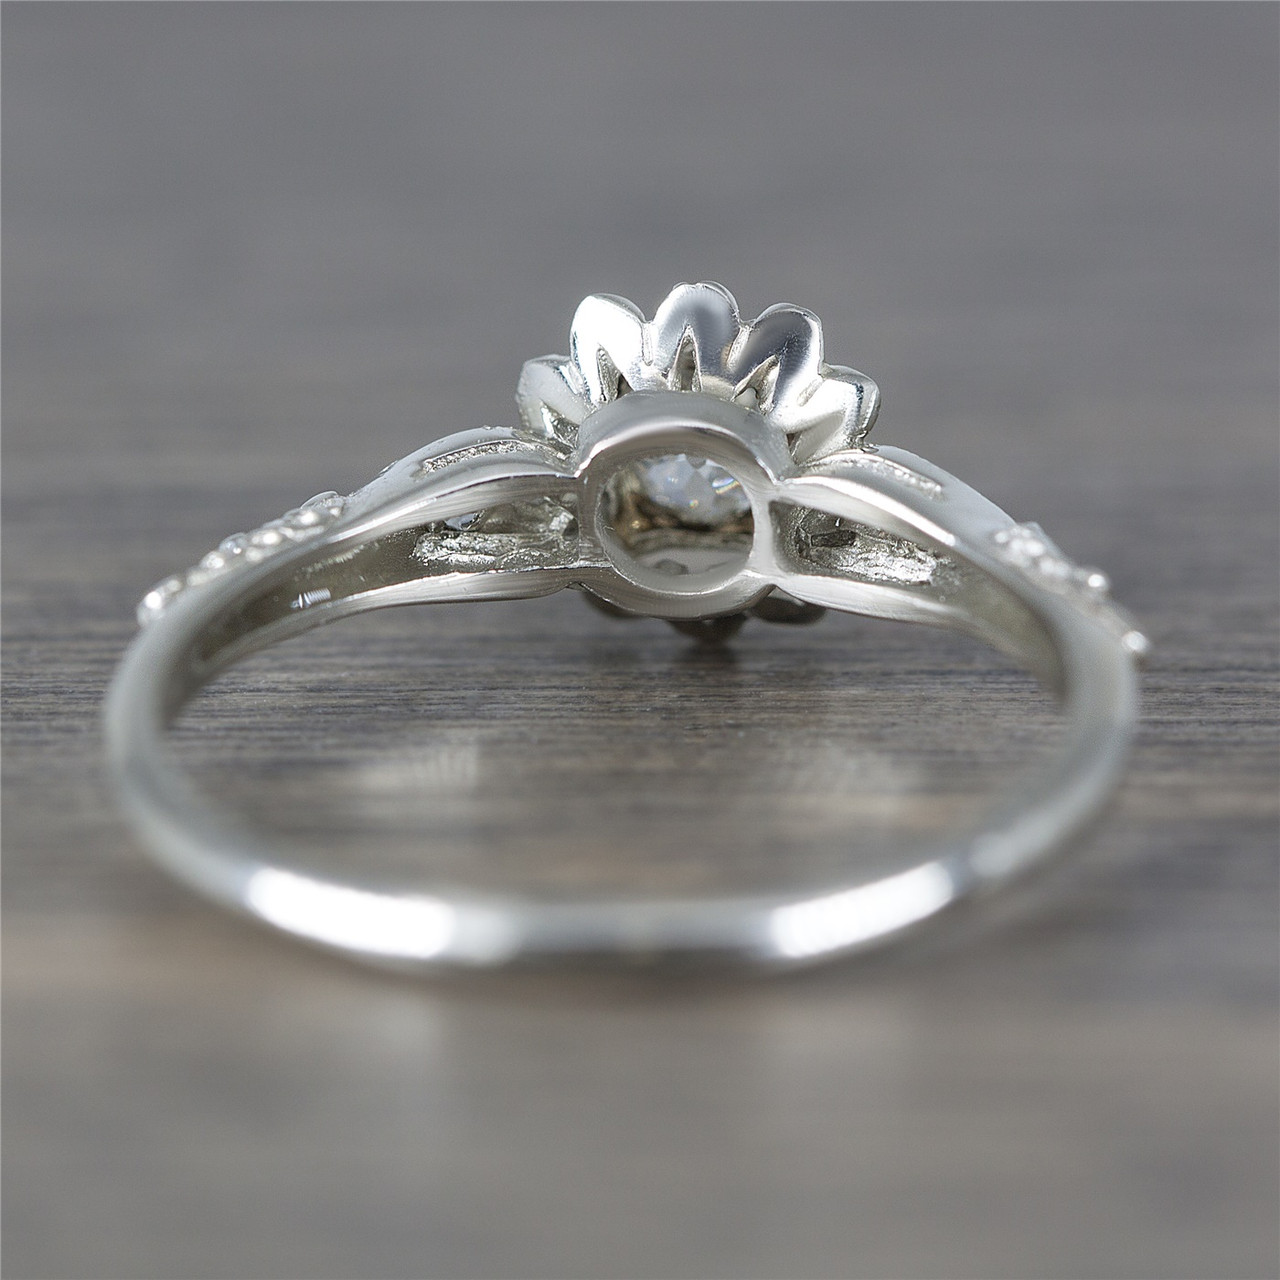 Vintage & Antique 1920s Art Deco Edwardian 2.48 Carat Total Weight Old  European Cut Diamond Engagement Ring in Platinum Theidolseye - Etsy | Art  deco engagement ring, Vintage engagement rings, European cut